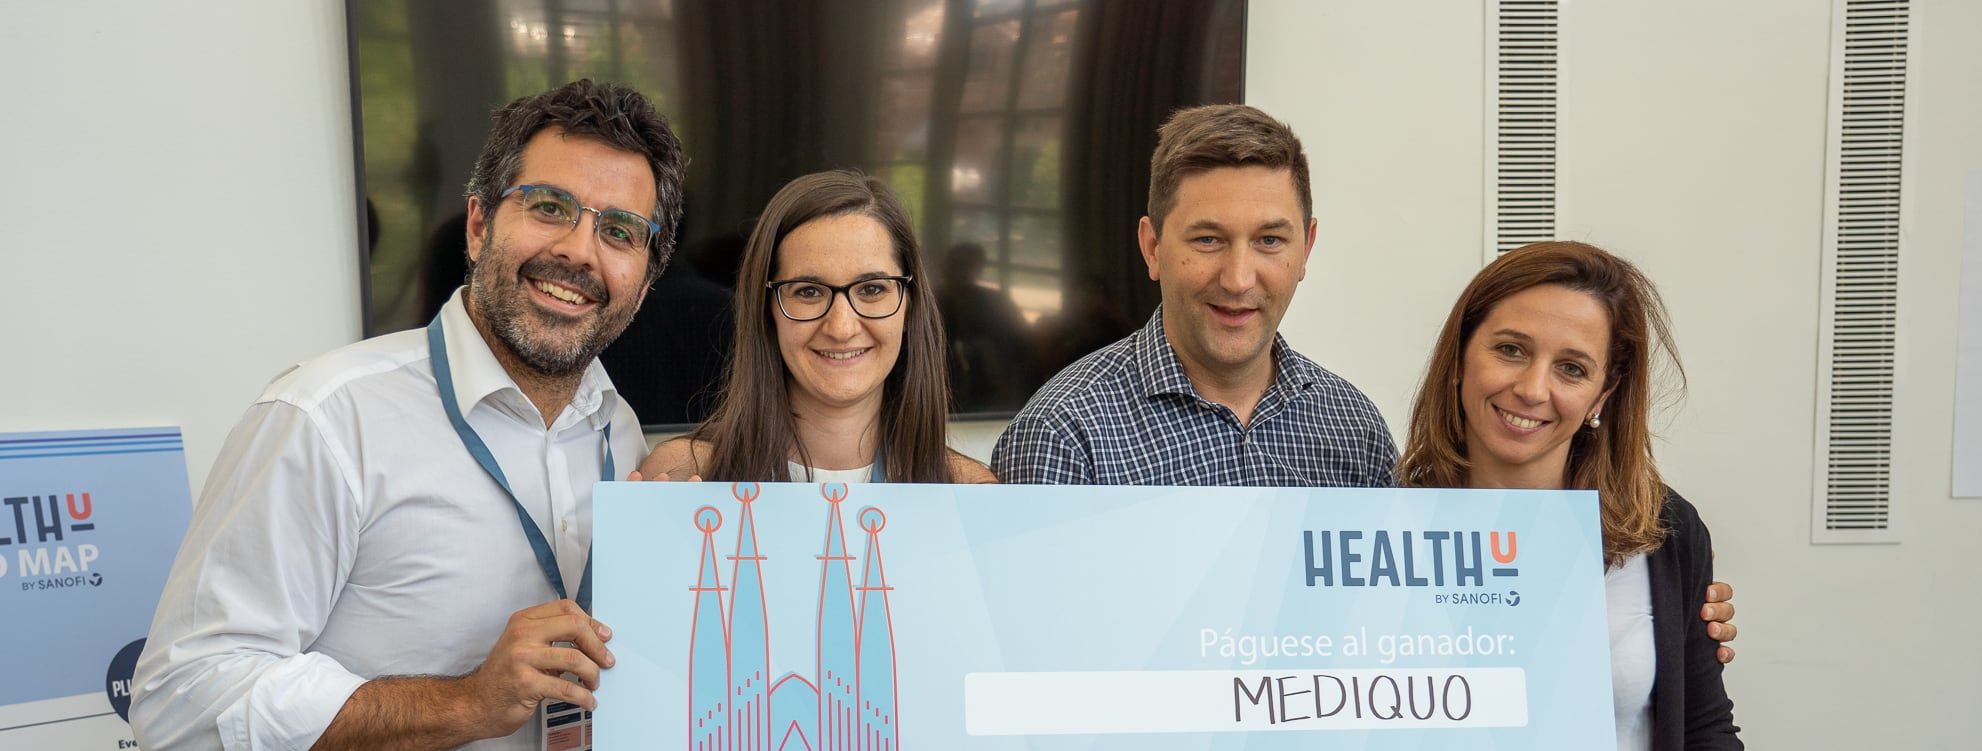 Sanofi Health-U 2019 Mediquo